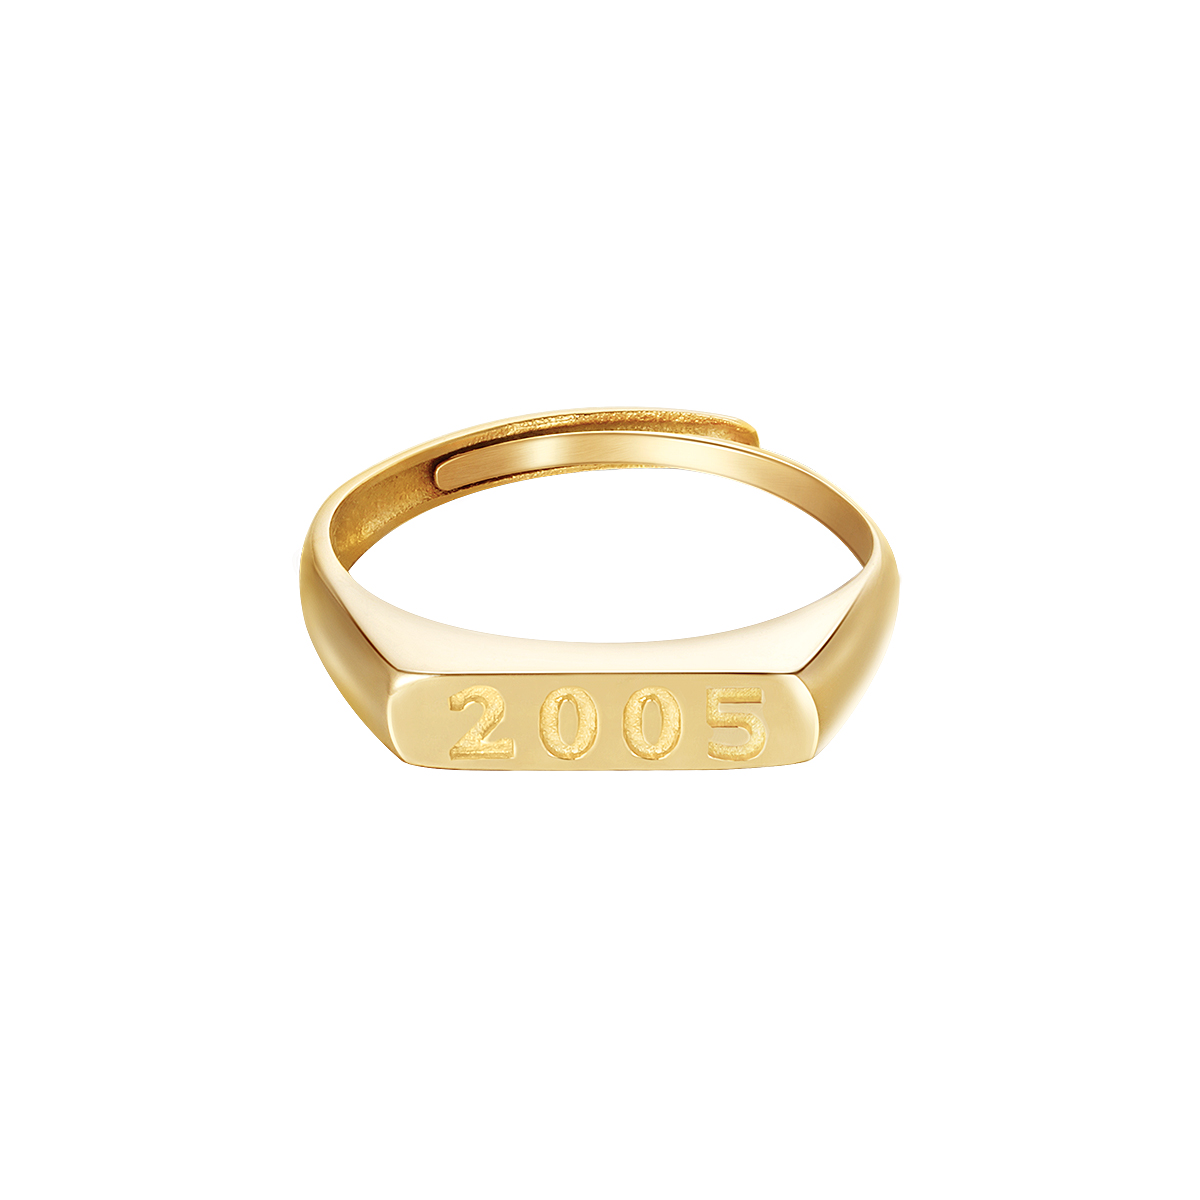 Ring Year Of Birth Gold - 1997